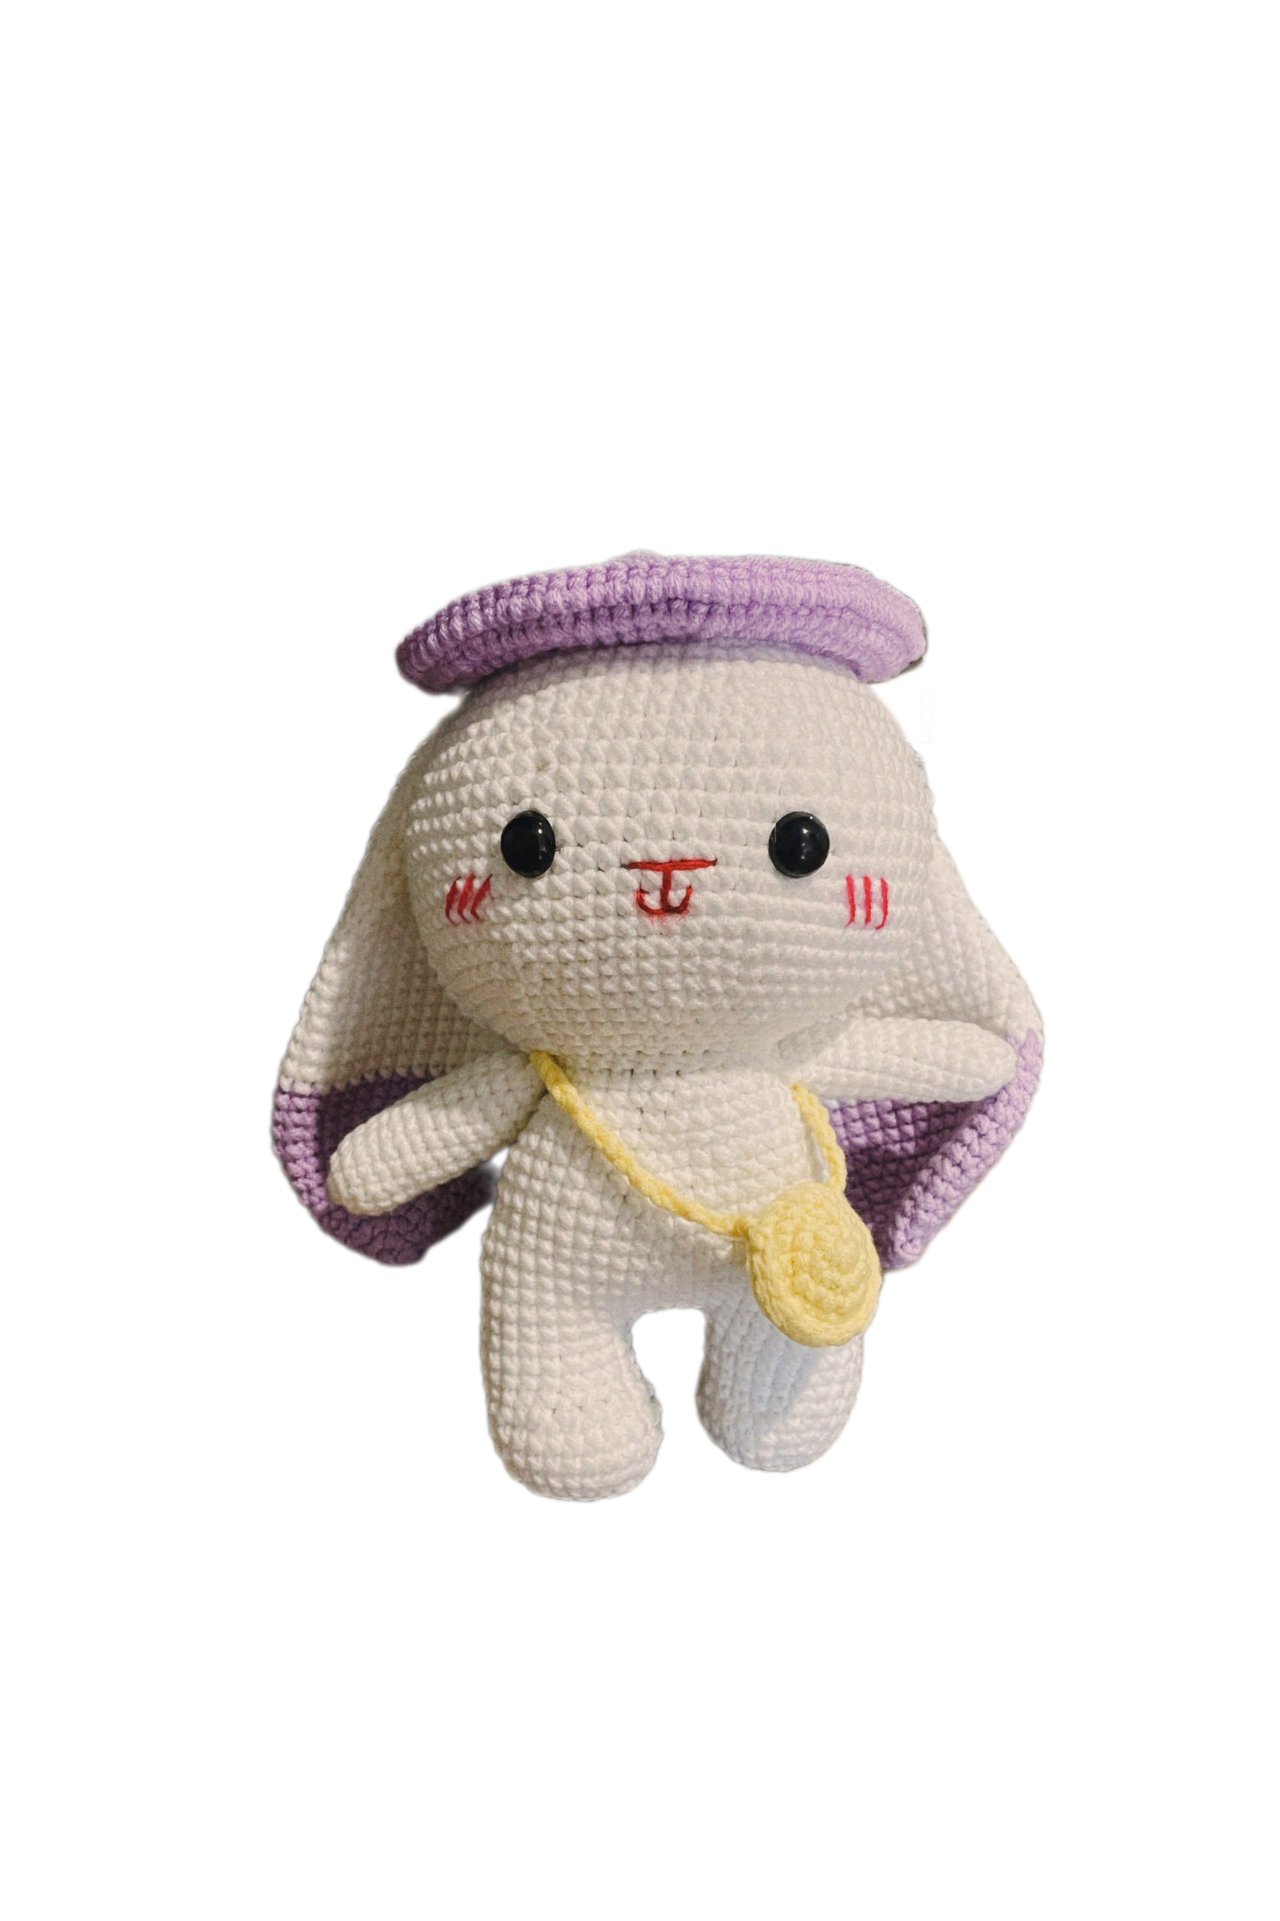 Handmade Knitting Stuffed Stuffed Crochet Rabbit Doll VAC | 𝐌𝐞𝐚𝐧𝐢𝐧𝐠𝐟𝐮𝐥 𝐆𝐢𝐟𝐭 𝐅𝐨𝐫 𝐋𝐨𝐯𝐞𝐝 𝐎𝐧𝐞𝐬